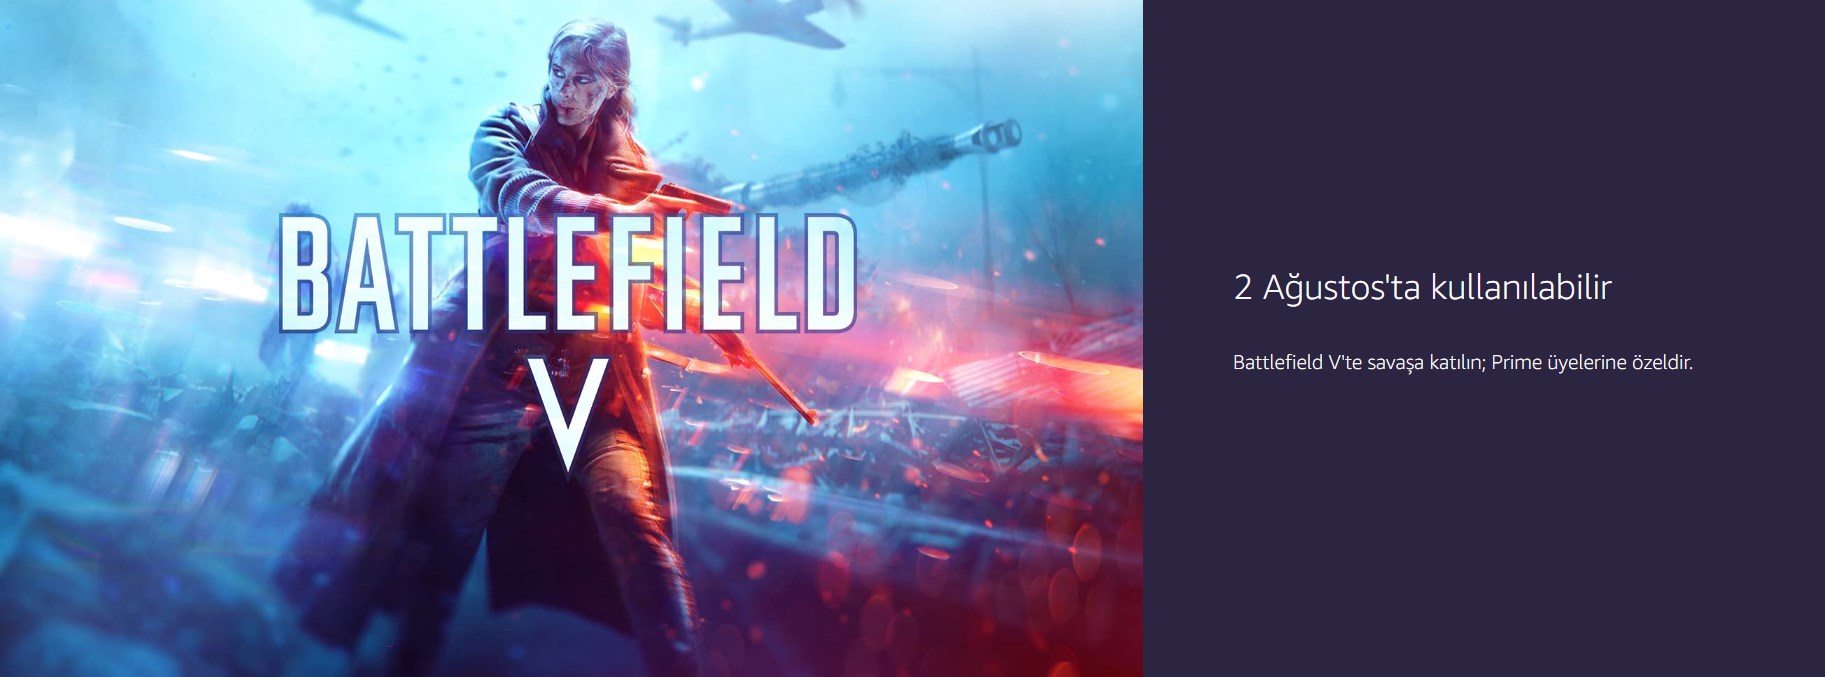 Amazon Prime Gaming'te Battlefield 1 ve Battlefield V ücretsiz